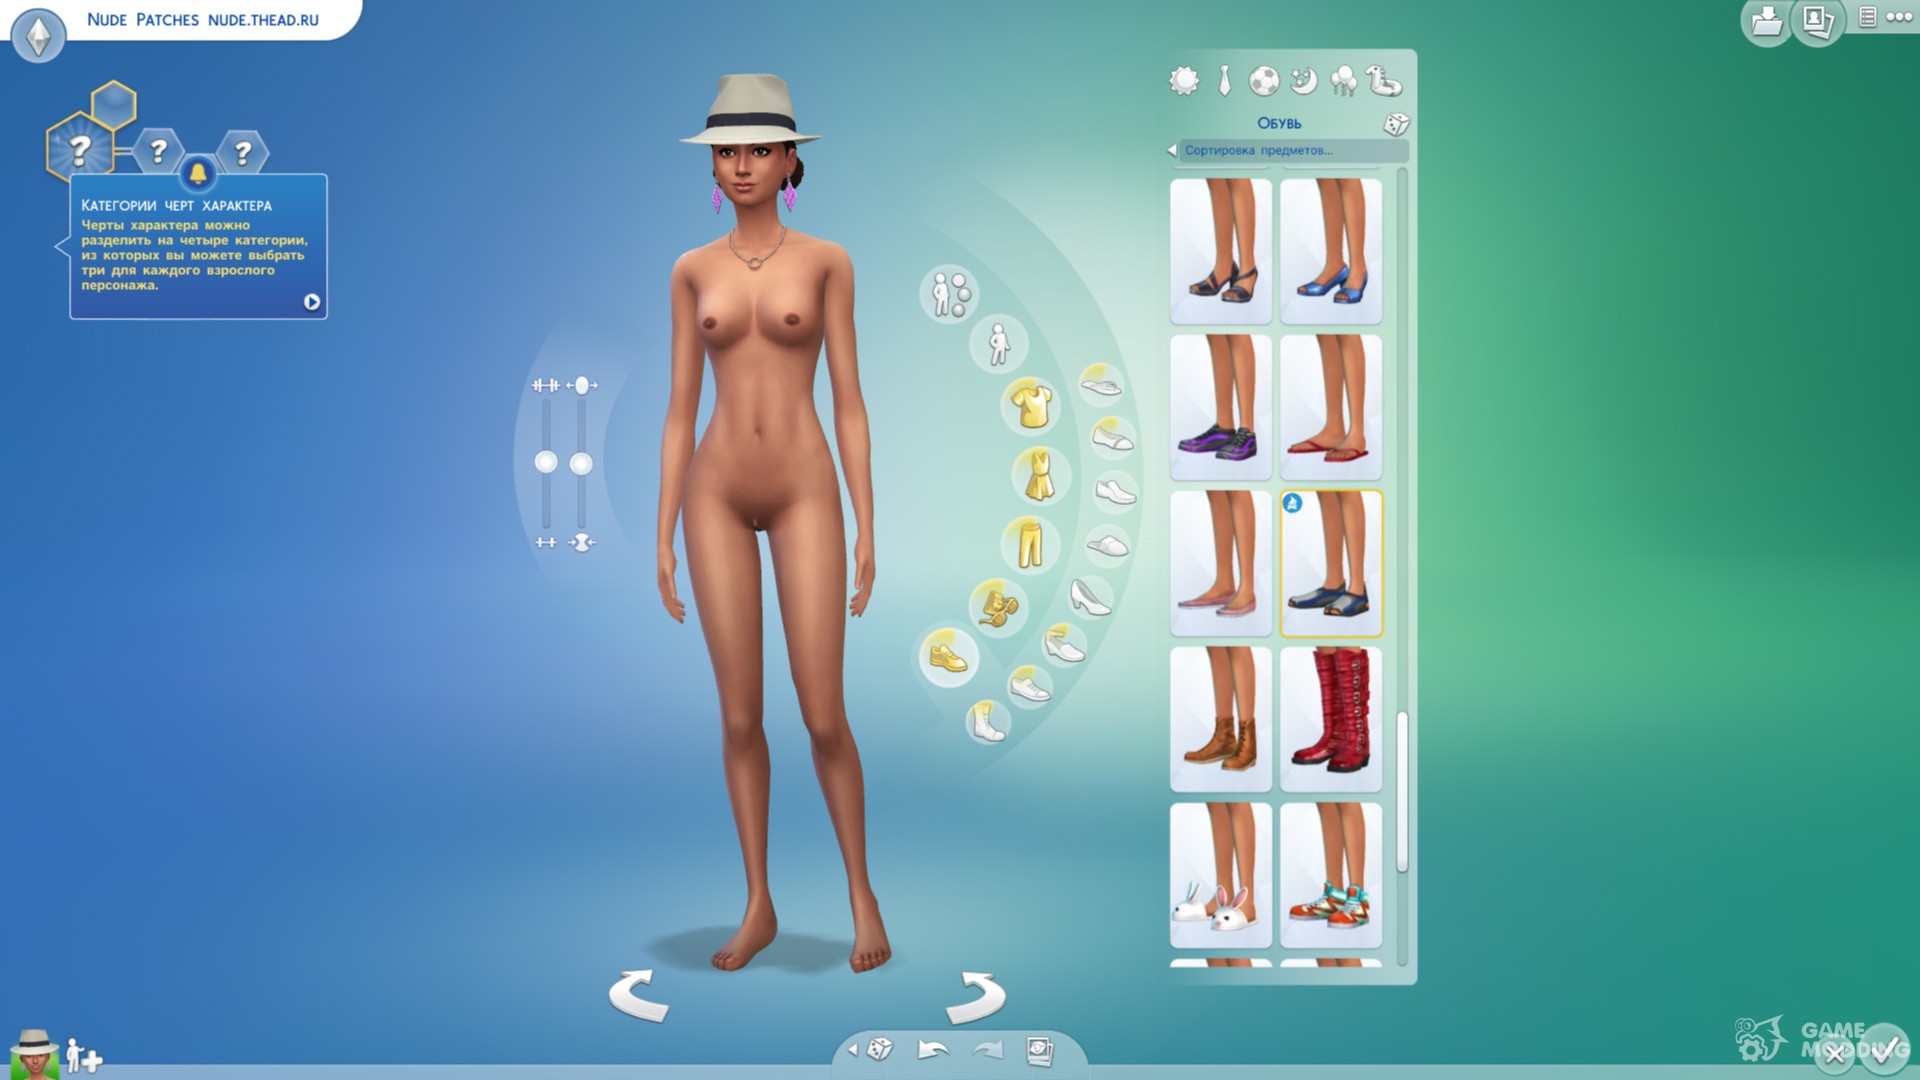 Sims 4 nudity mods